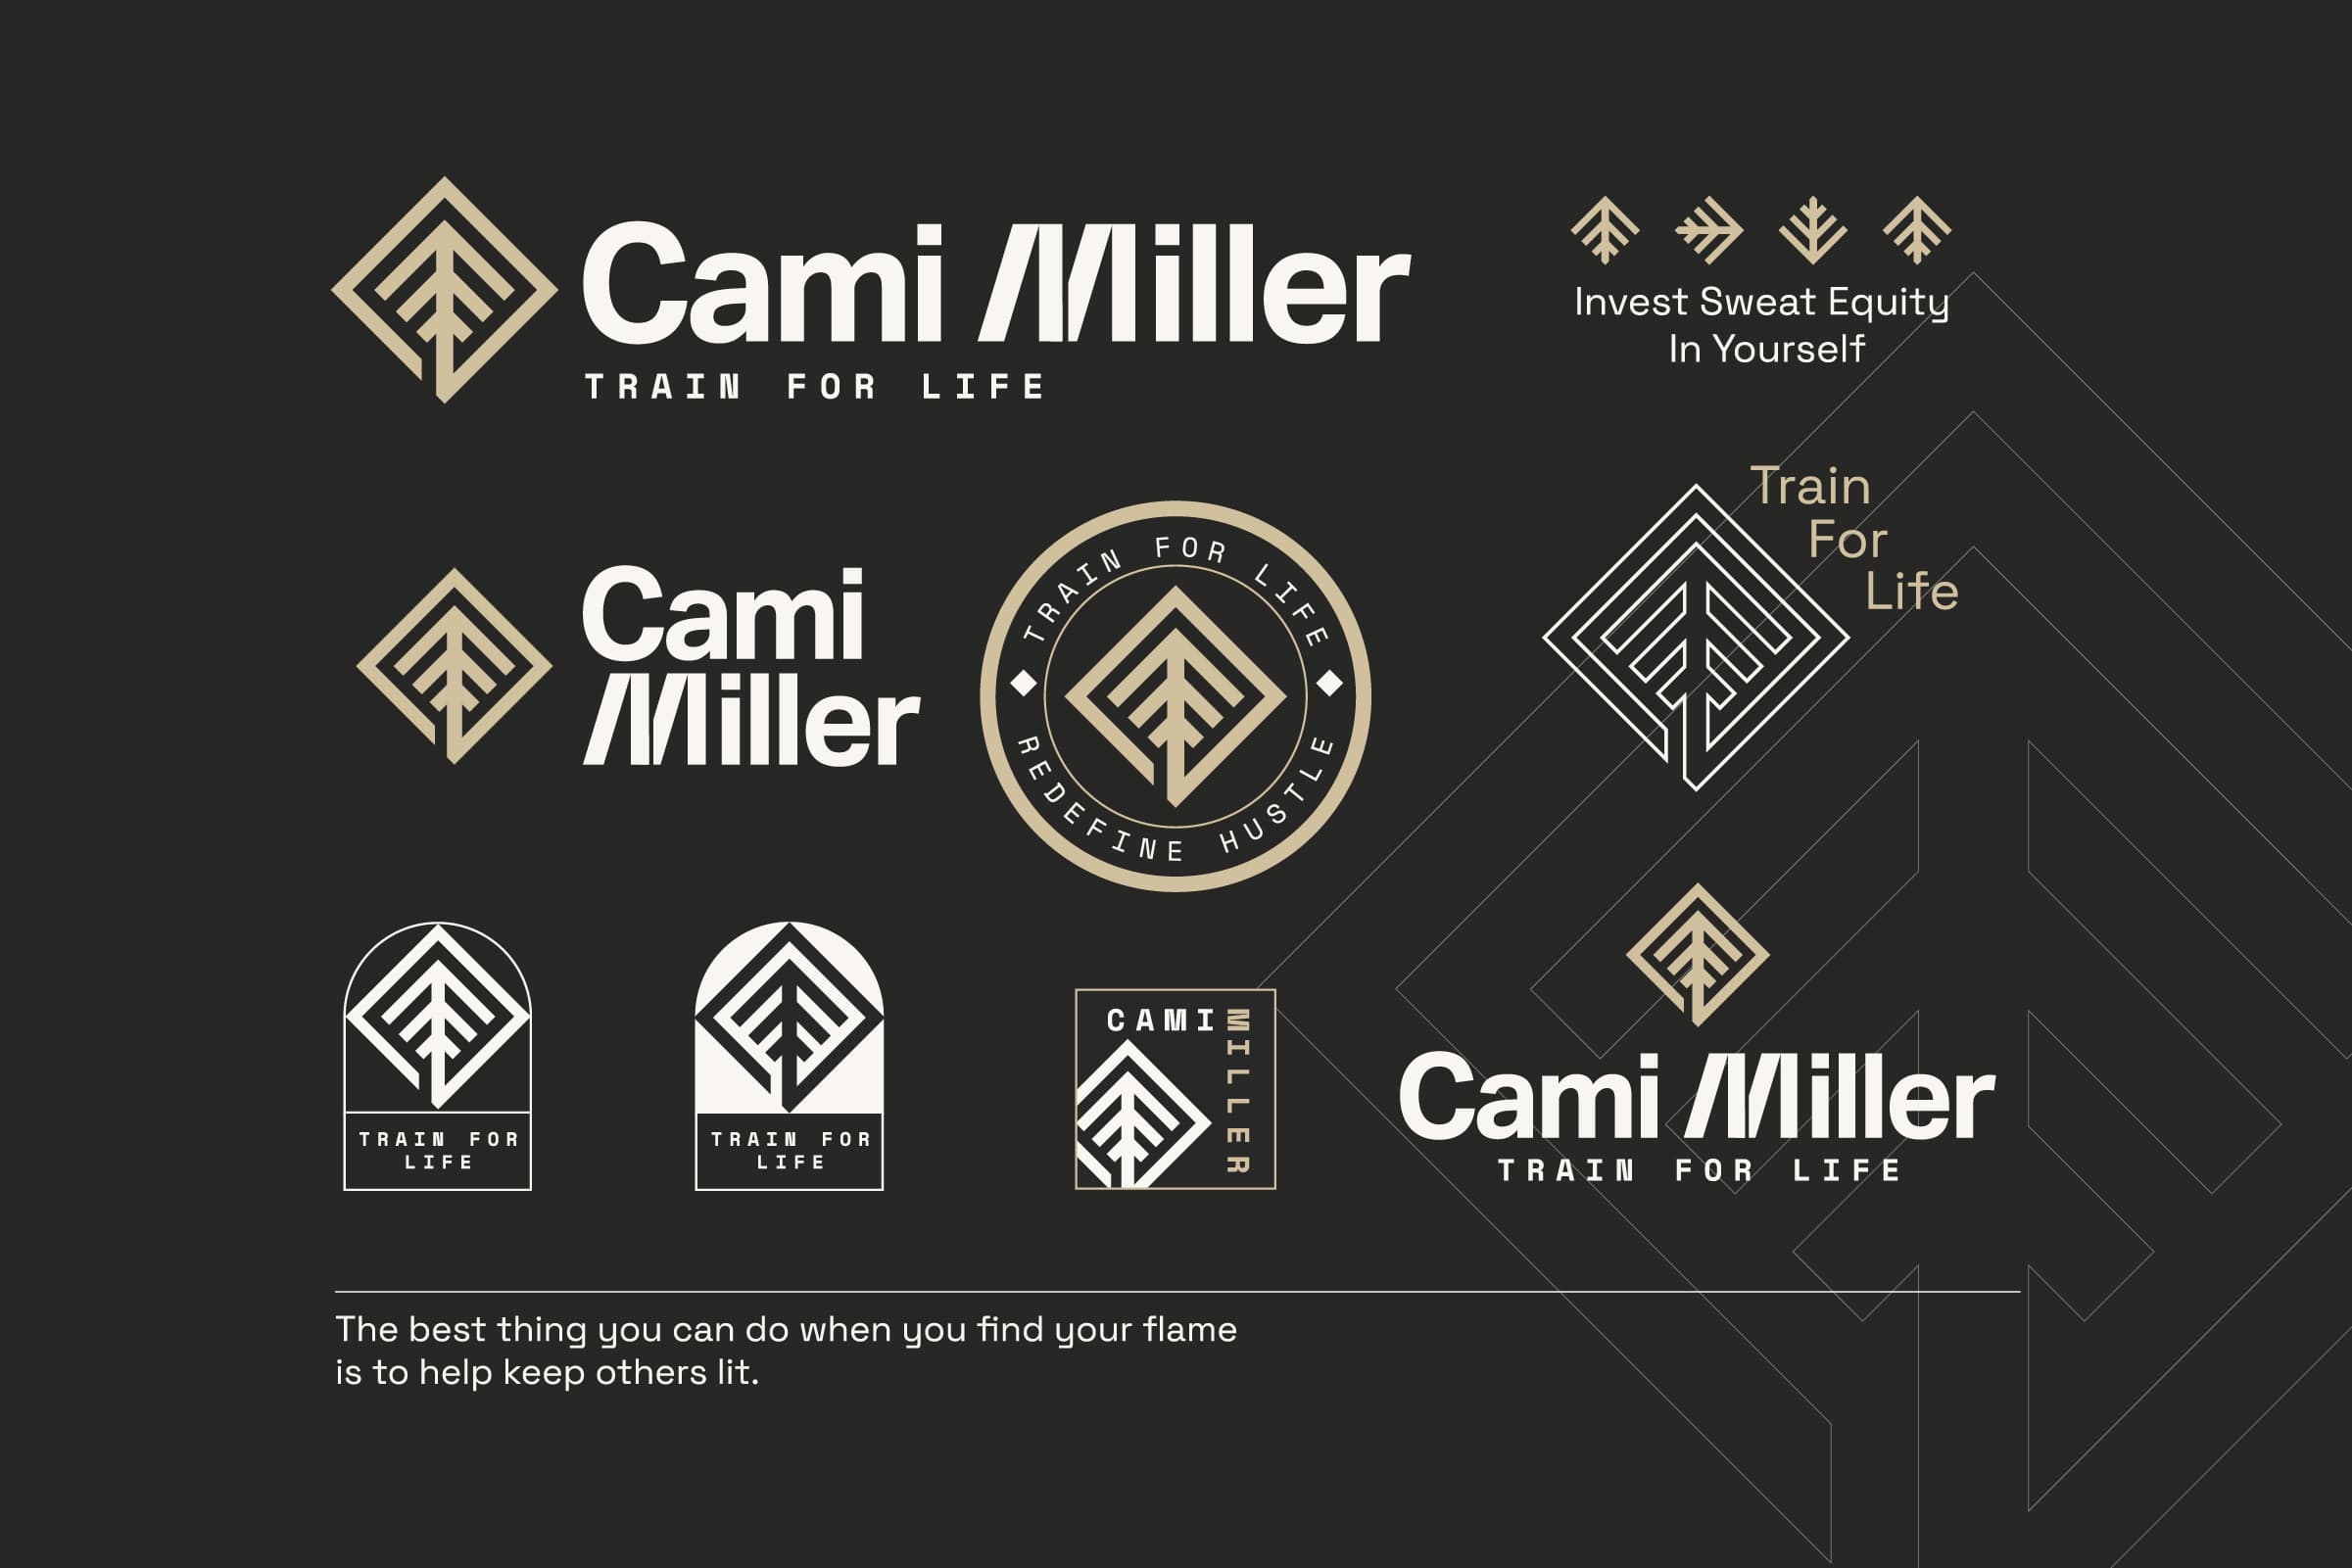 cami milller branding and design specimen